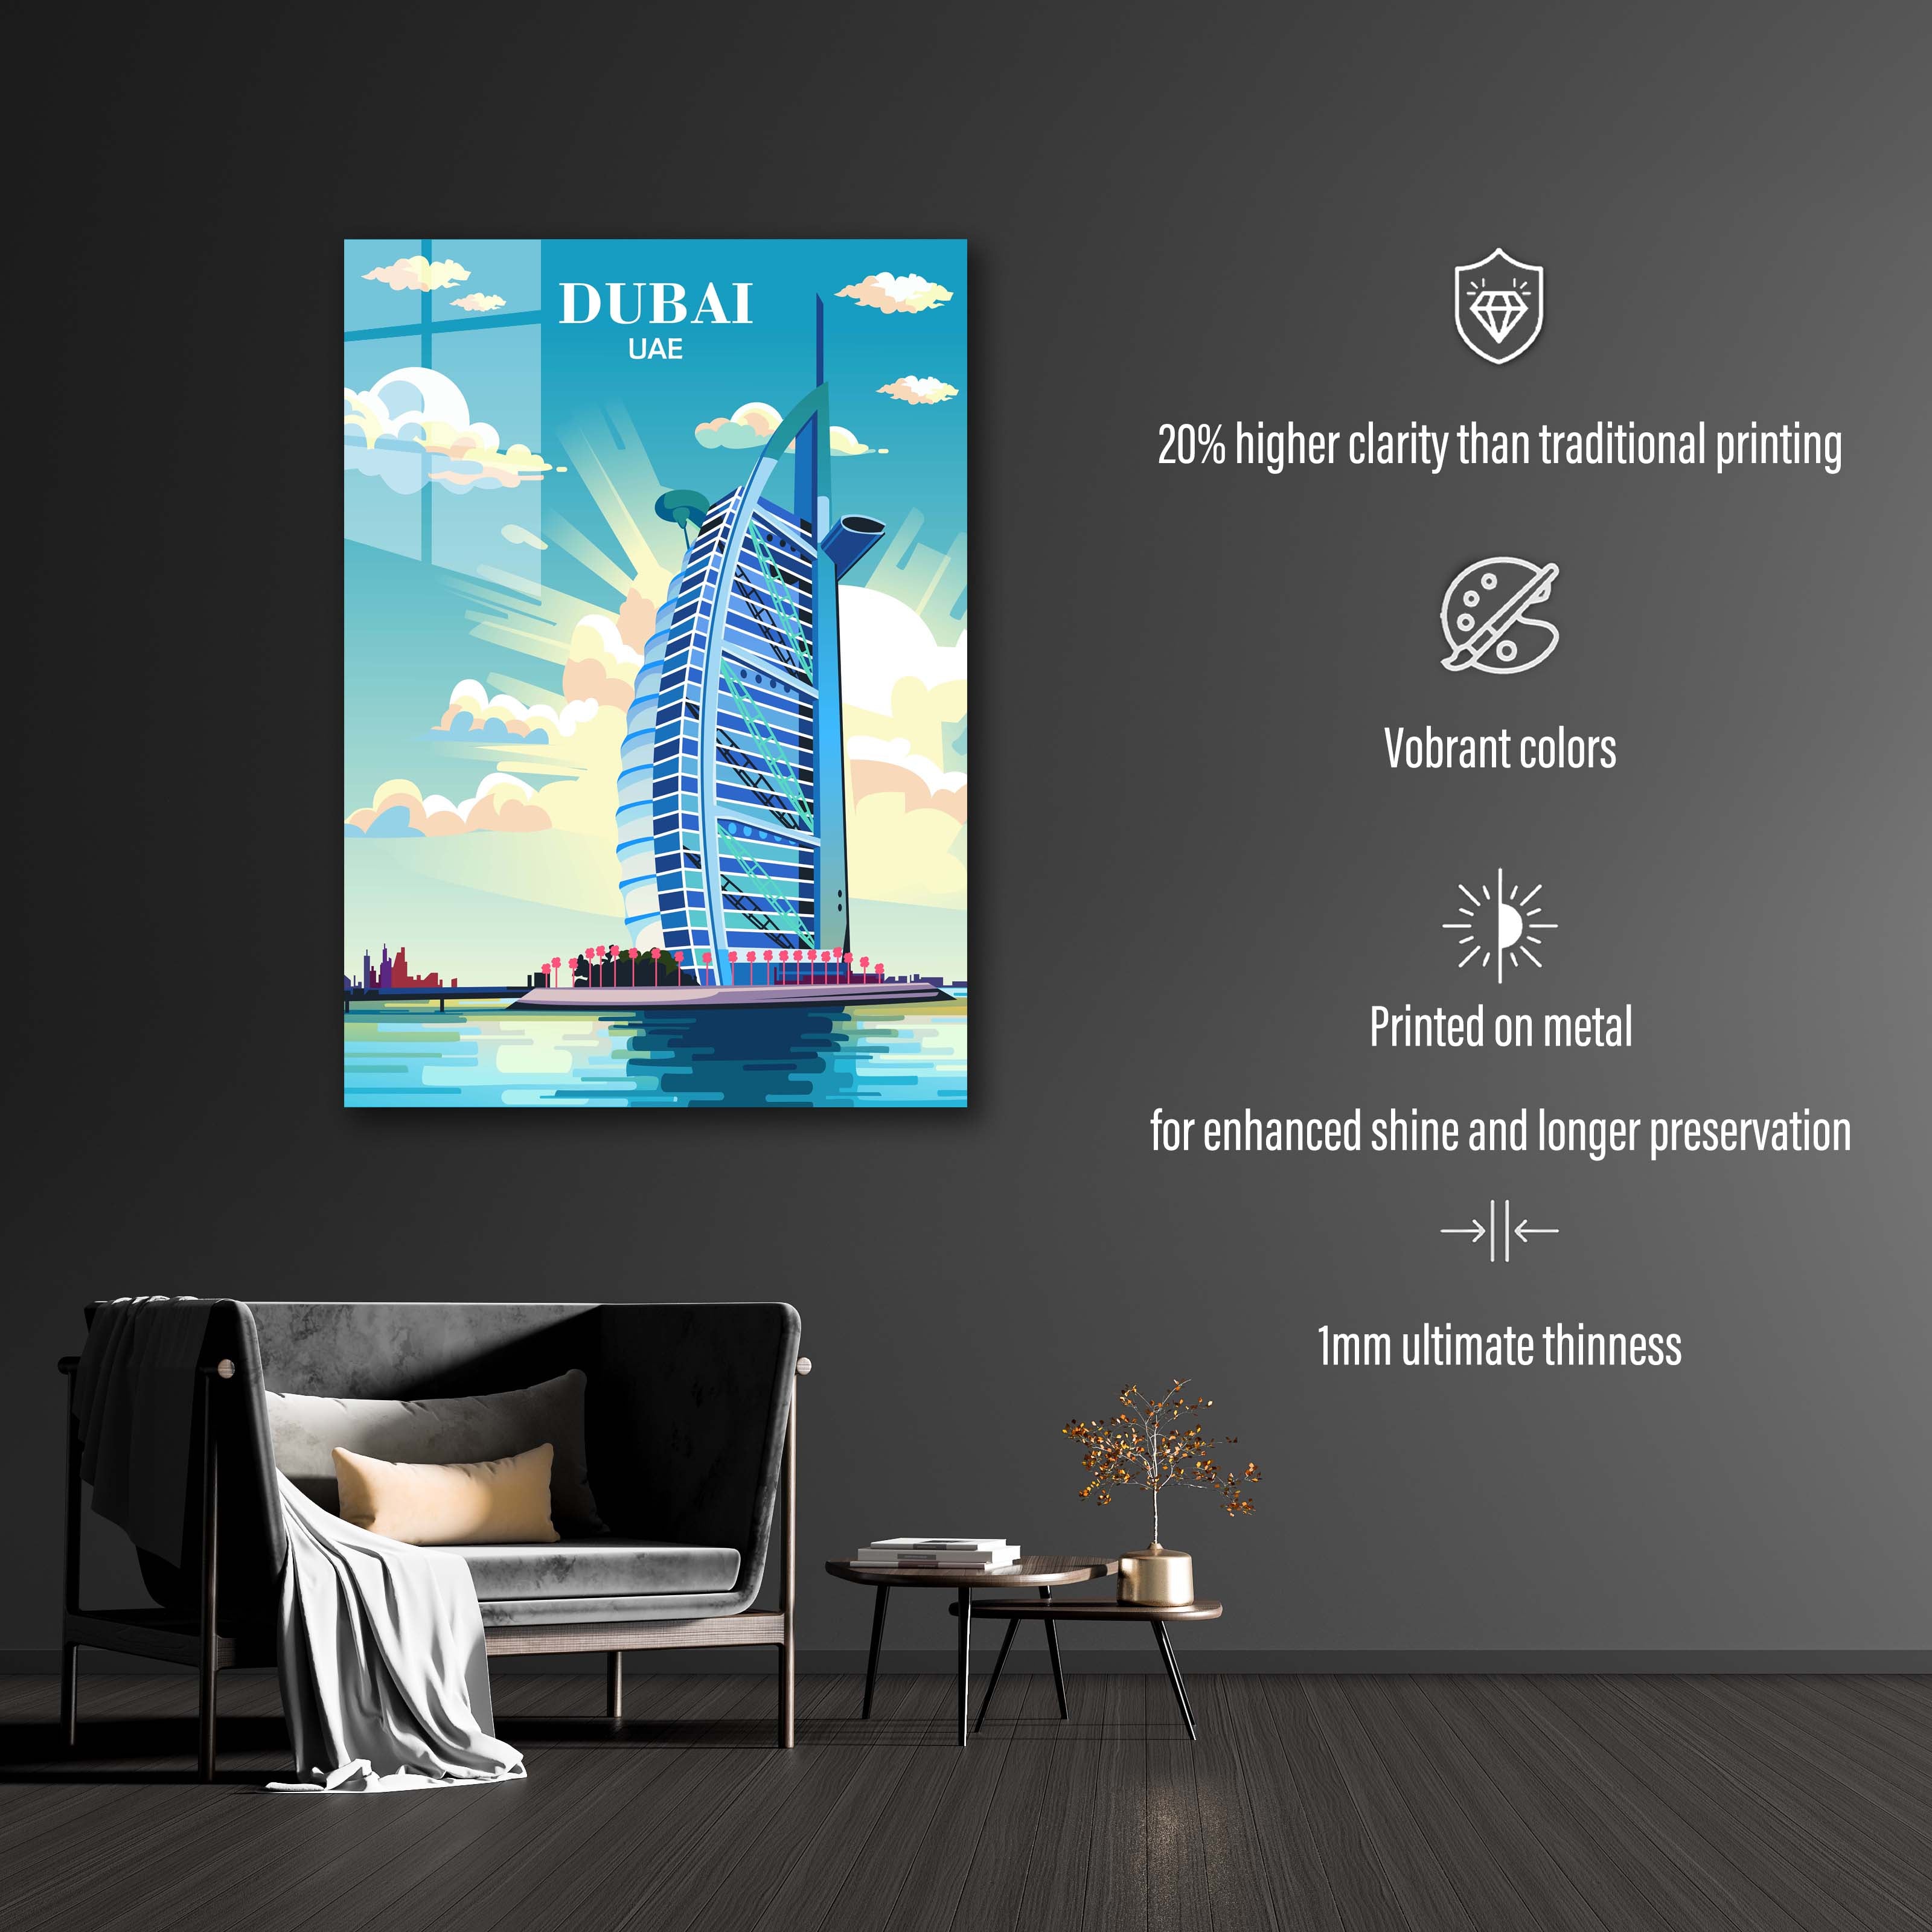 Travel Poster Dubai UAE-designed by @dikasujud